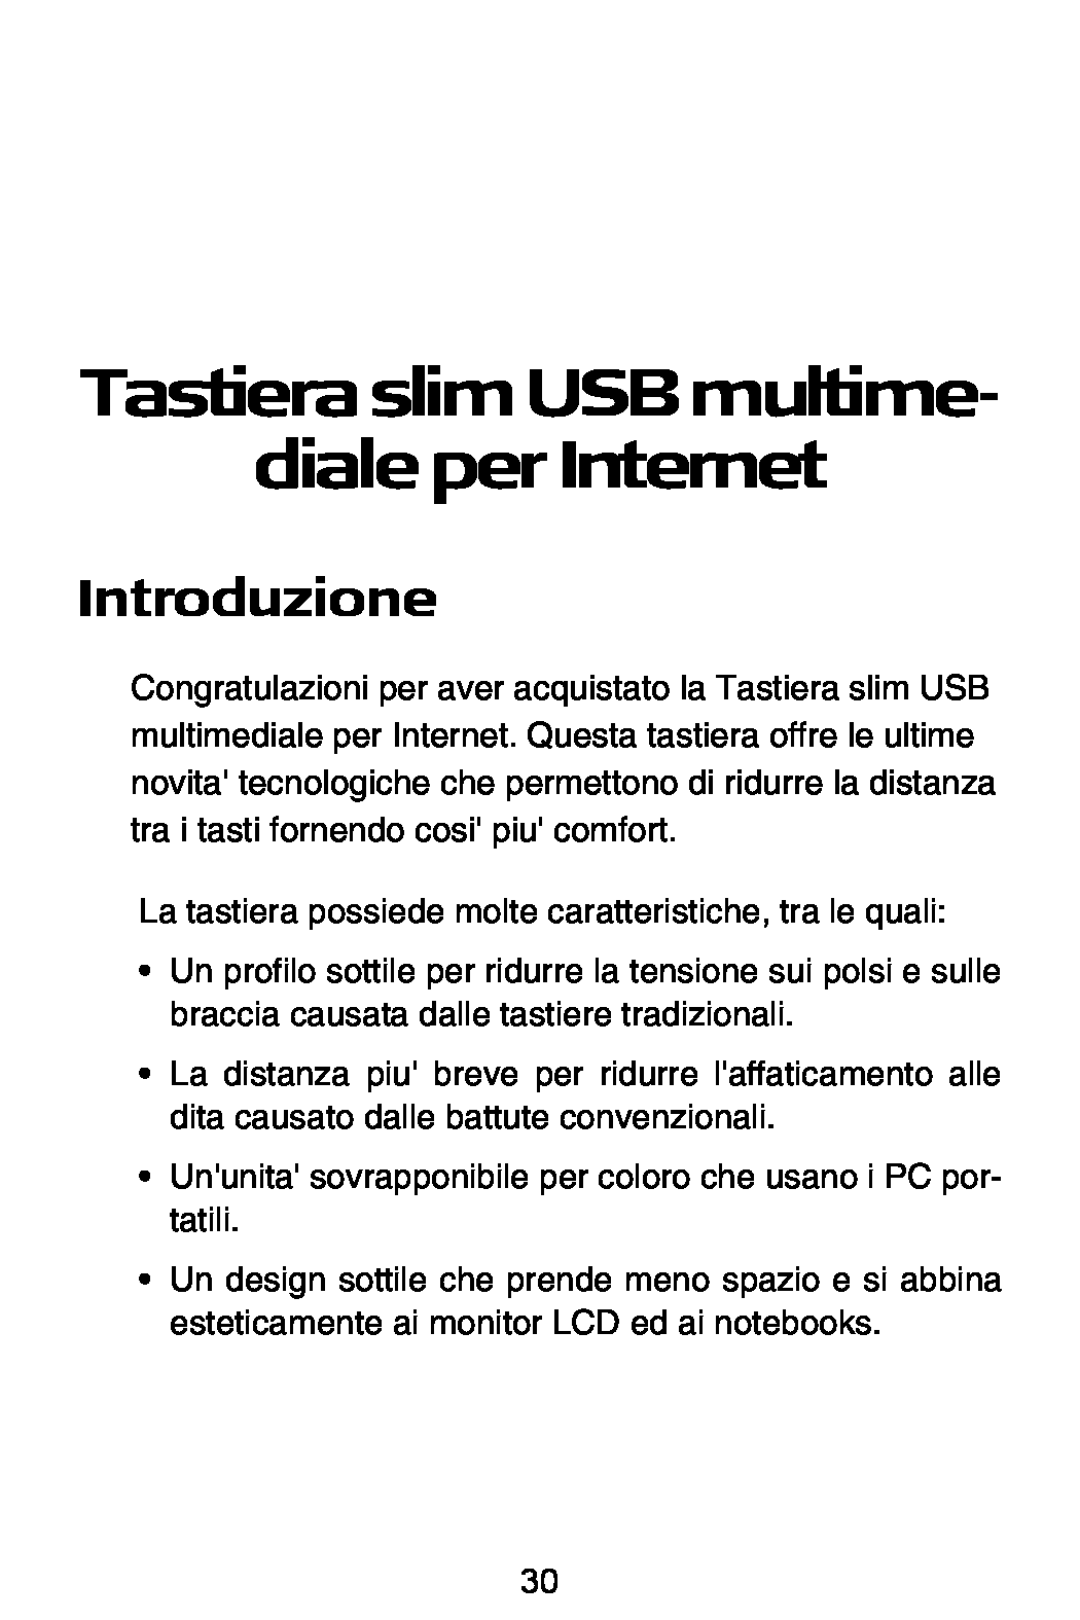 Targus slim internet multimedia USB keyboard specifications TastieraslimUSBmultime dialeperInternet, Introduzione 